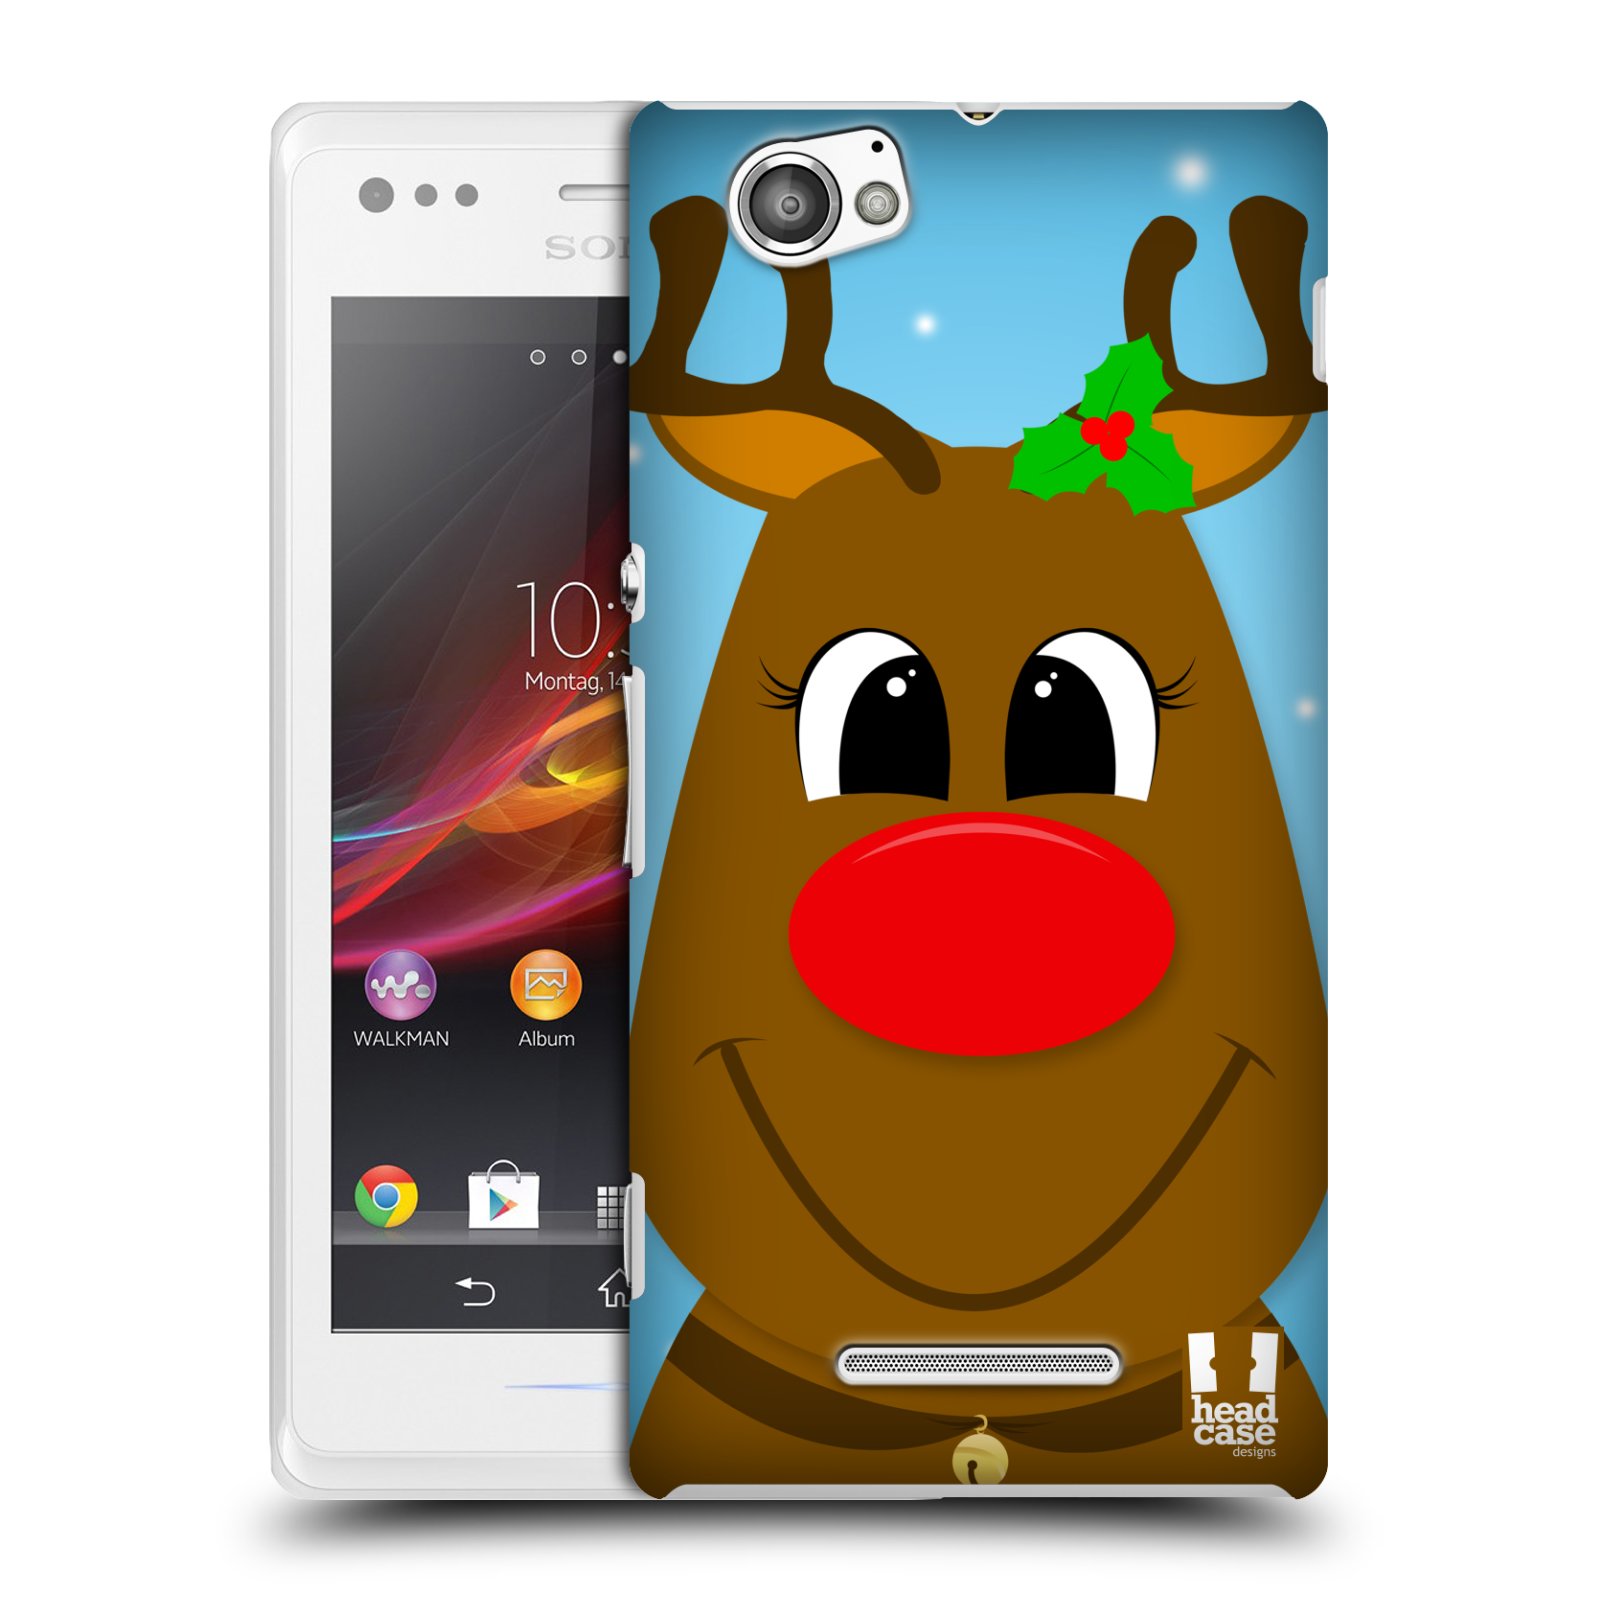 HEAD CASE plastový obal na mobil Sony Xperia M vzor Vánoční tváře kreslené SOB RUDOLF